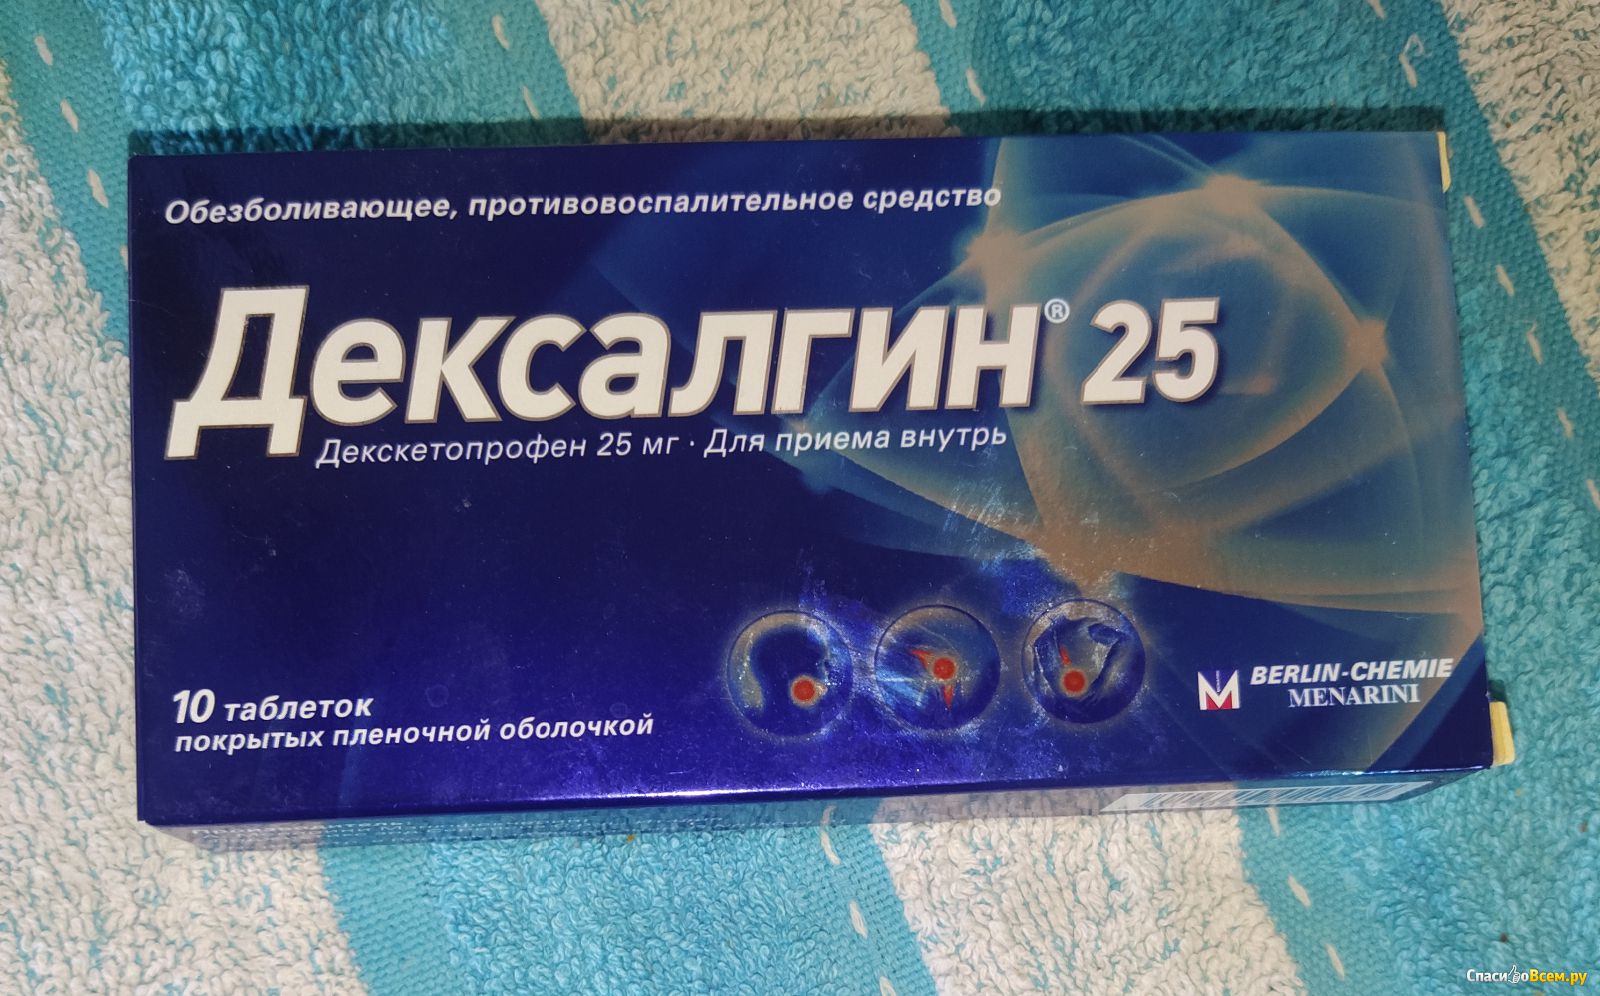 Сильное обезболивающее отзывы. Обезболивающие таблетки дексалгин. Дексалгин 25 таблетки красная упаковка.